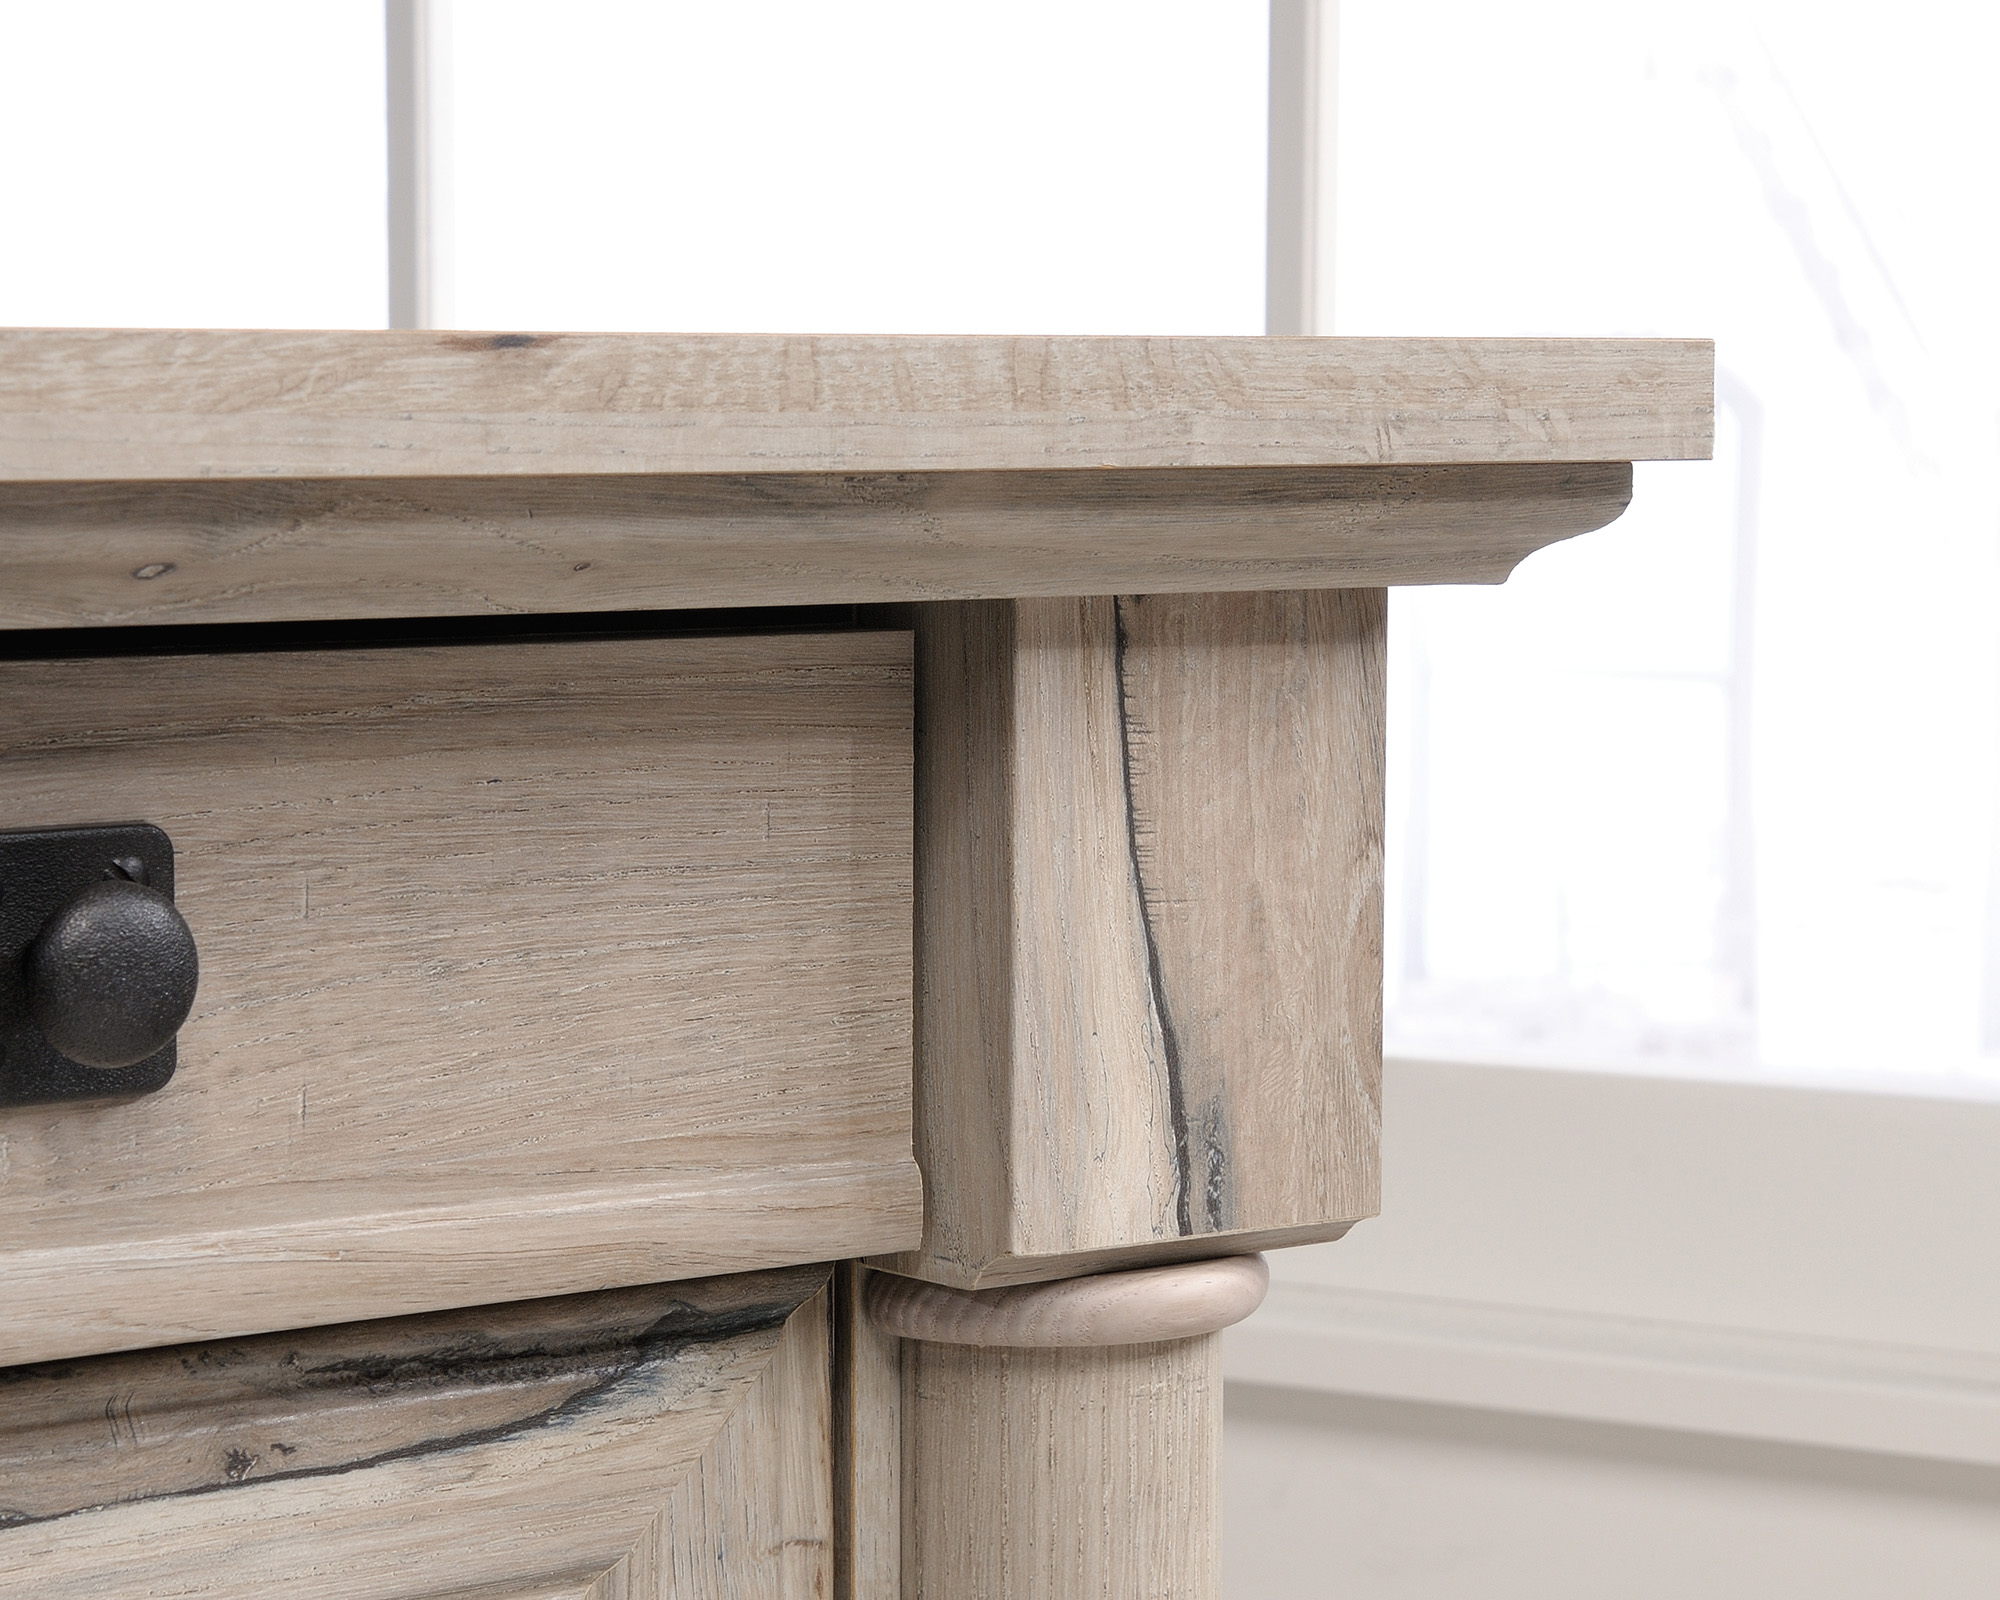 Sauder Palladia® L-Shaped Desk, Split Oak® finish (# 424811)